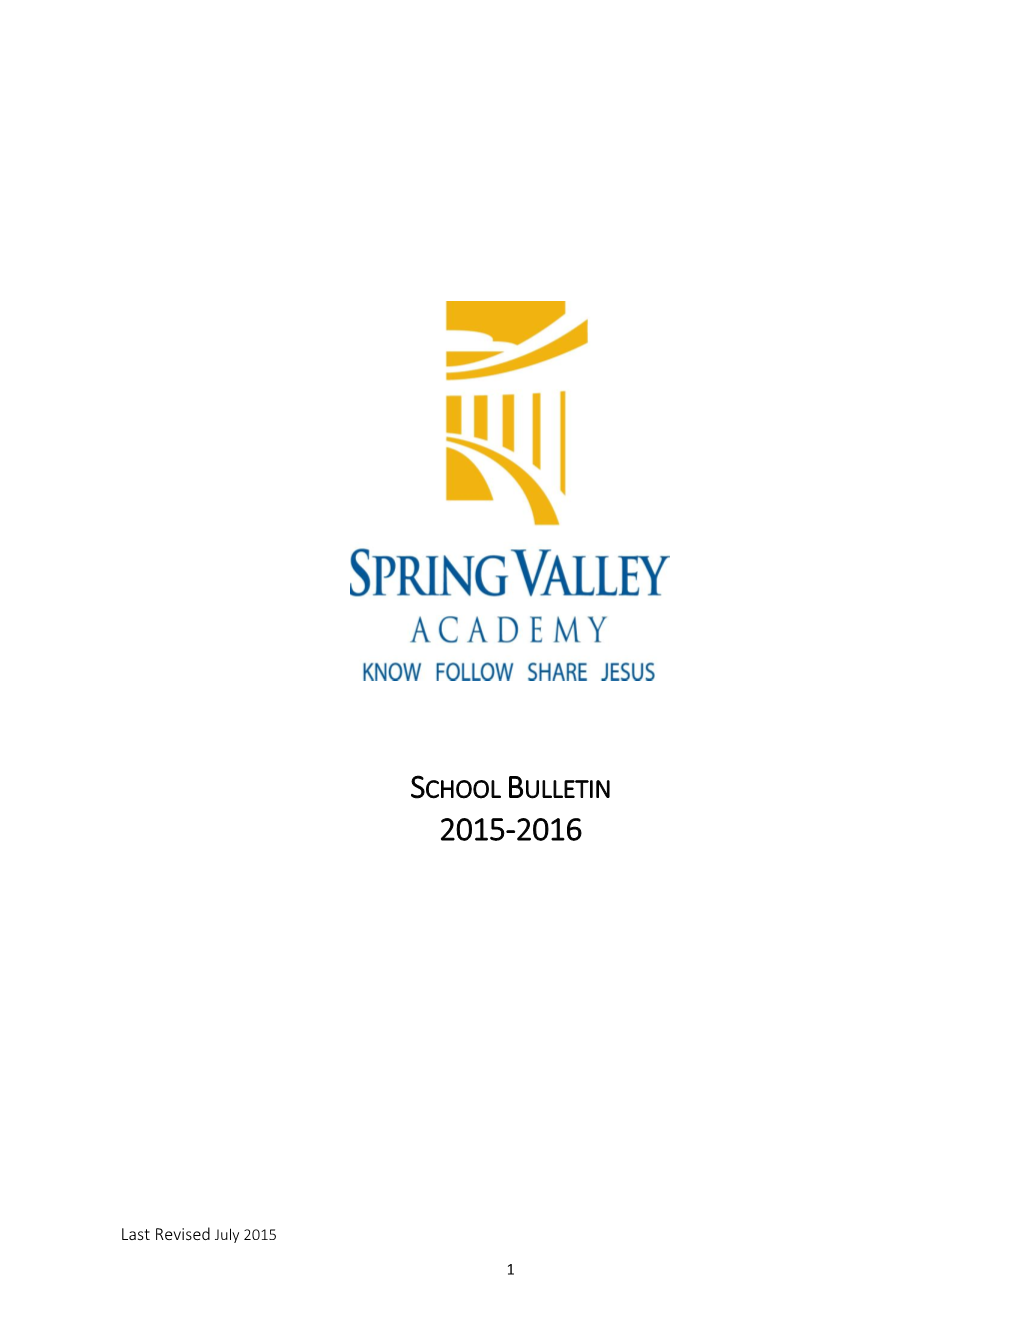 School Bulletin 2015-2016